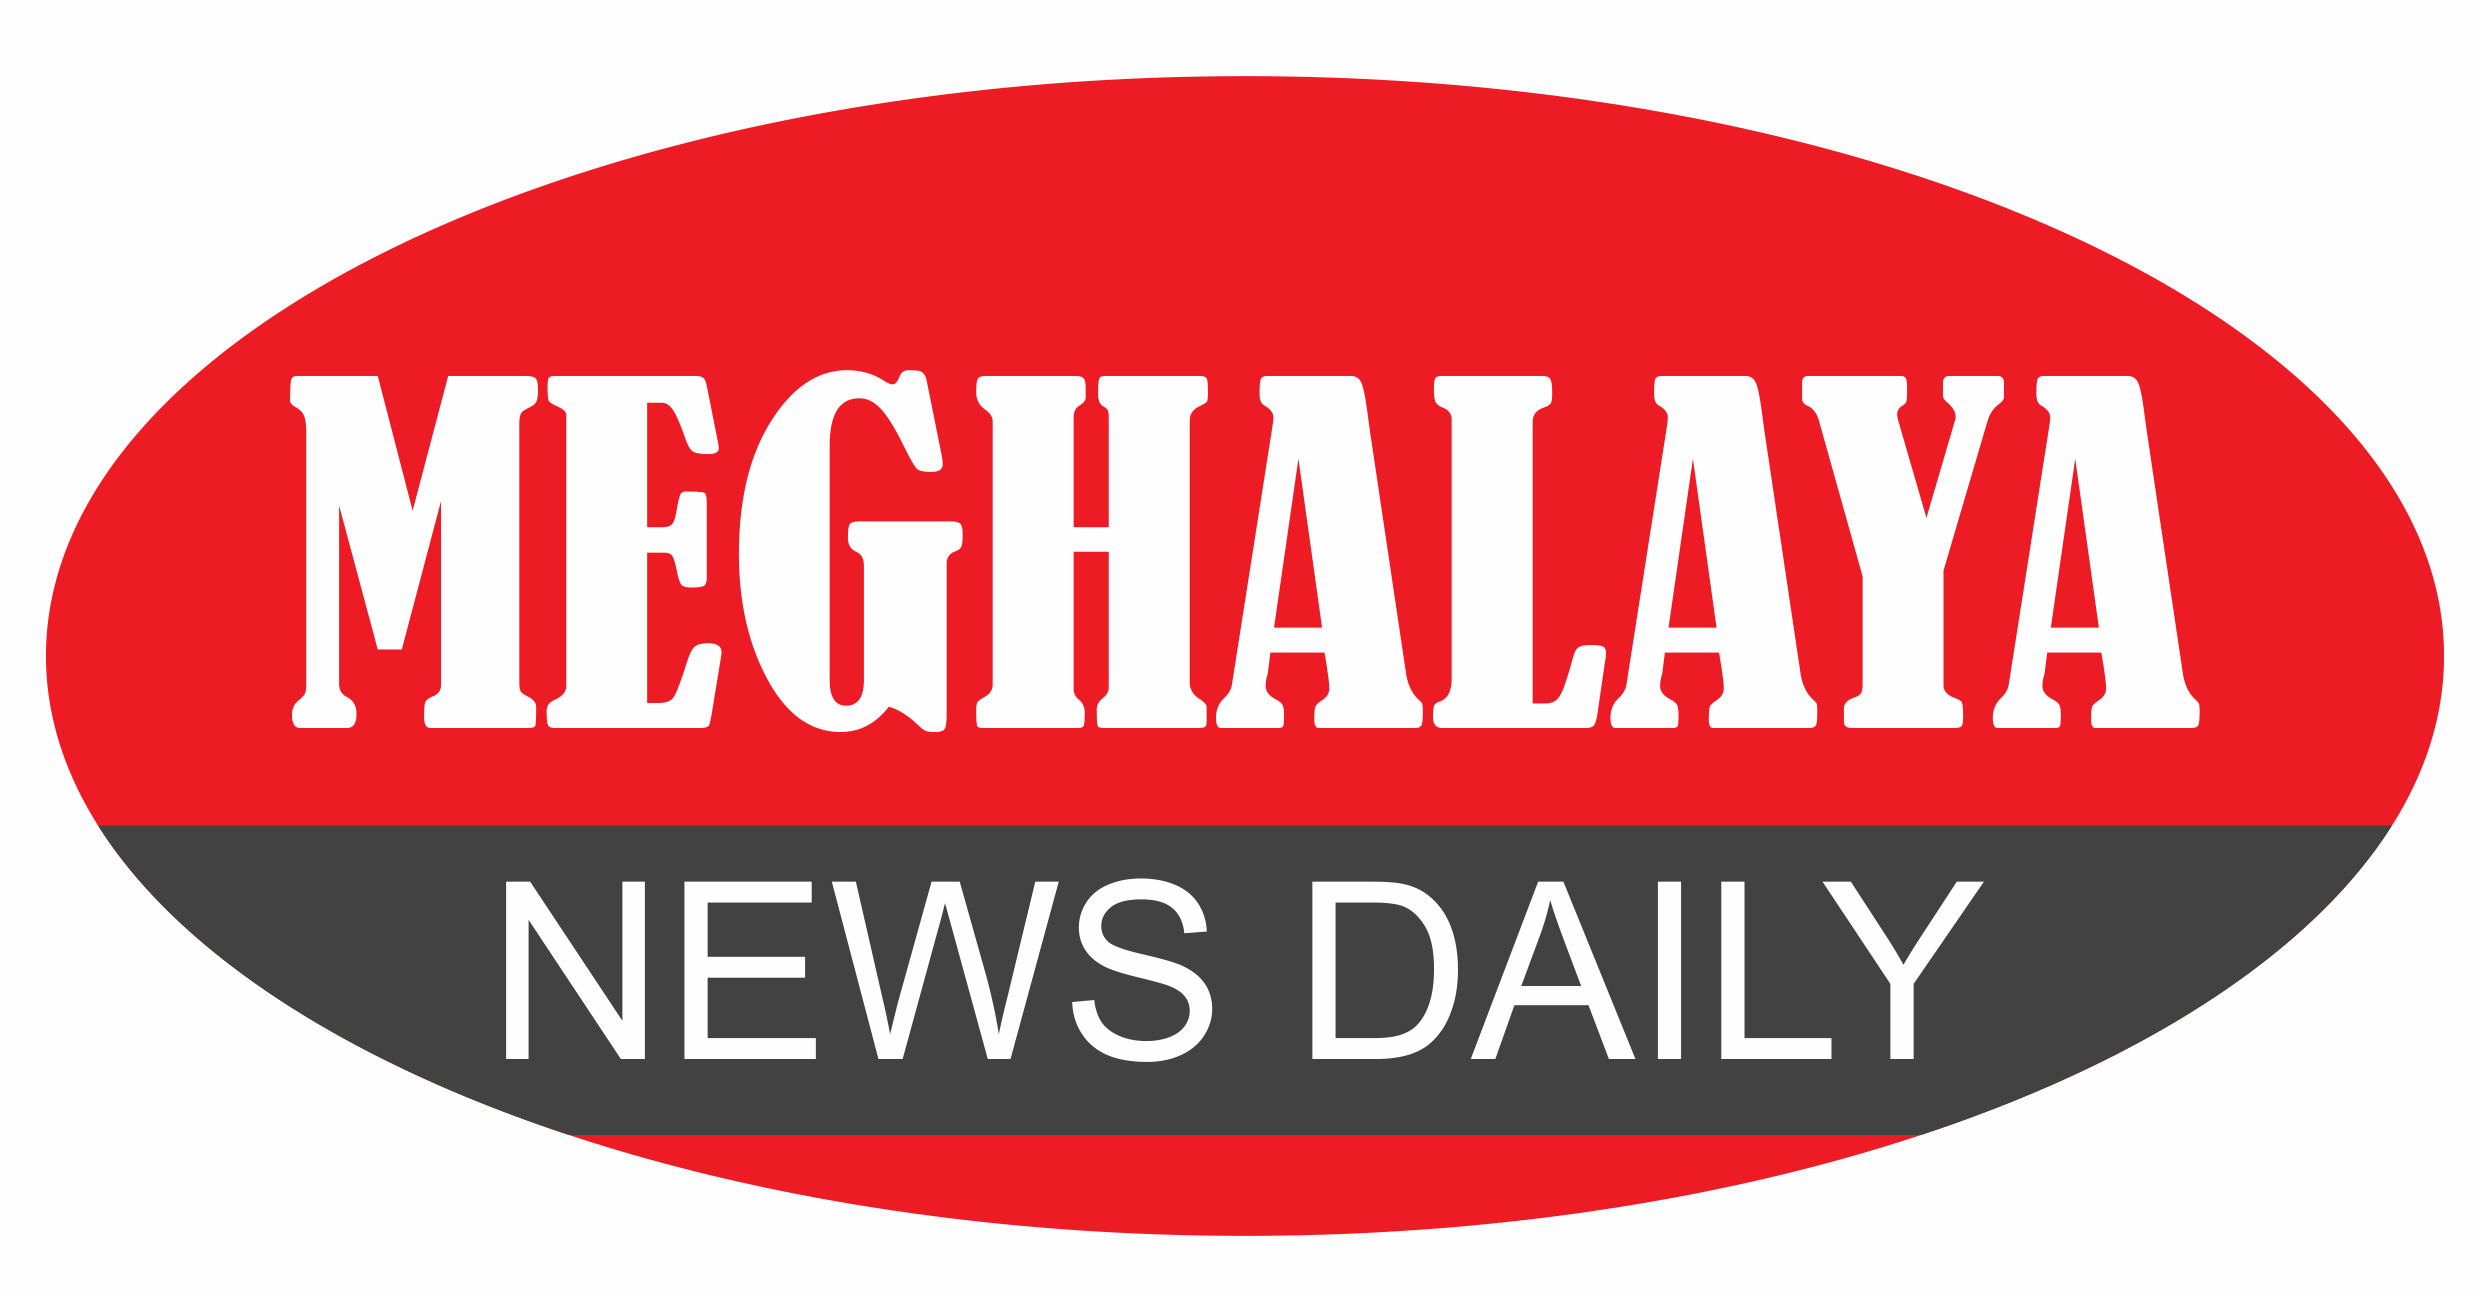 Meghalaya News Daily